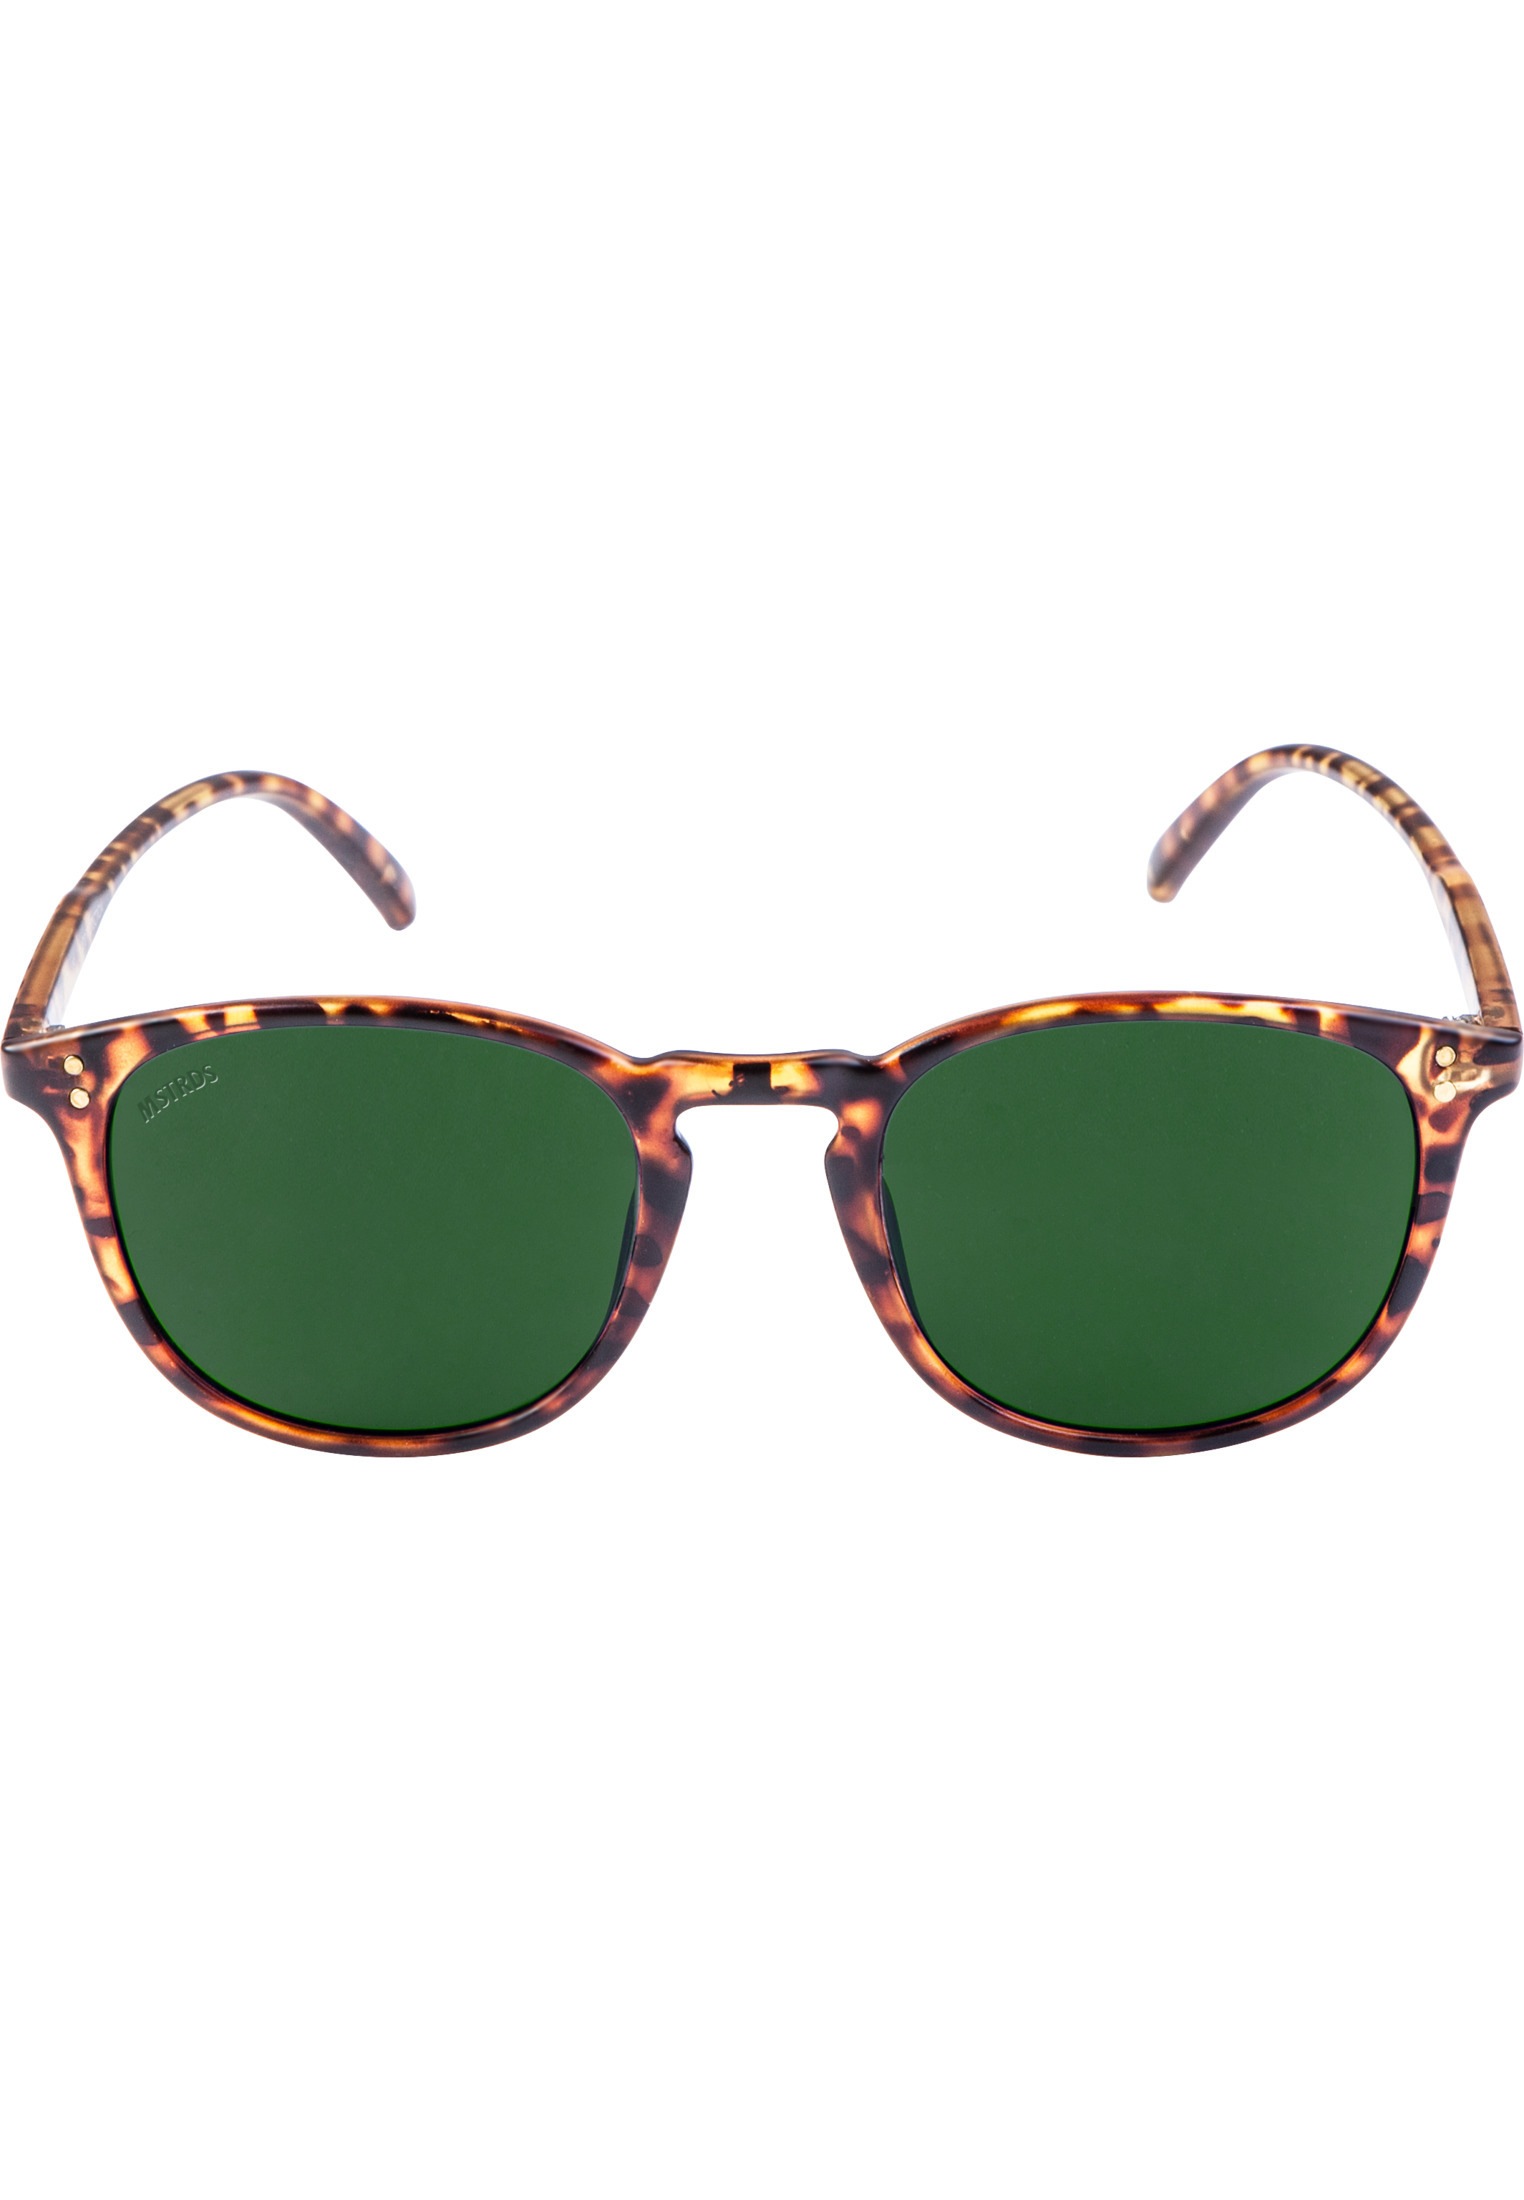 | Sunglasses MSTRDS Black Friday »Accessoires BAUR Arthur« Sonnenbrille